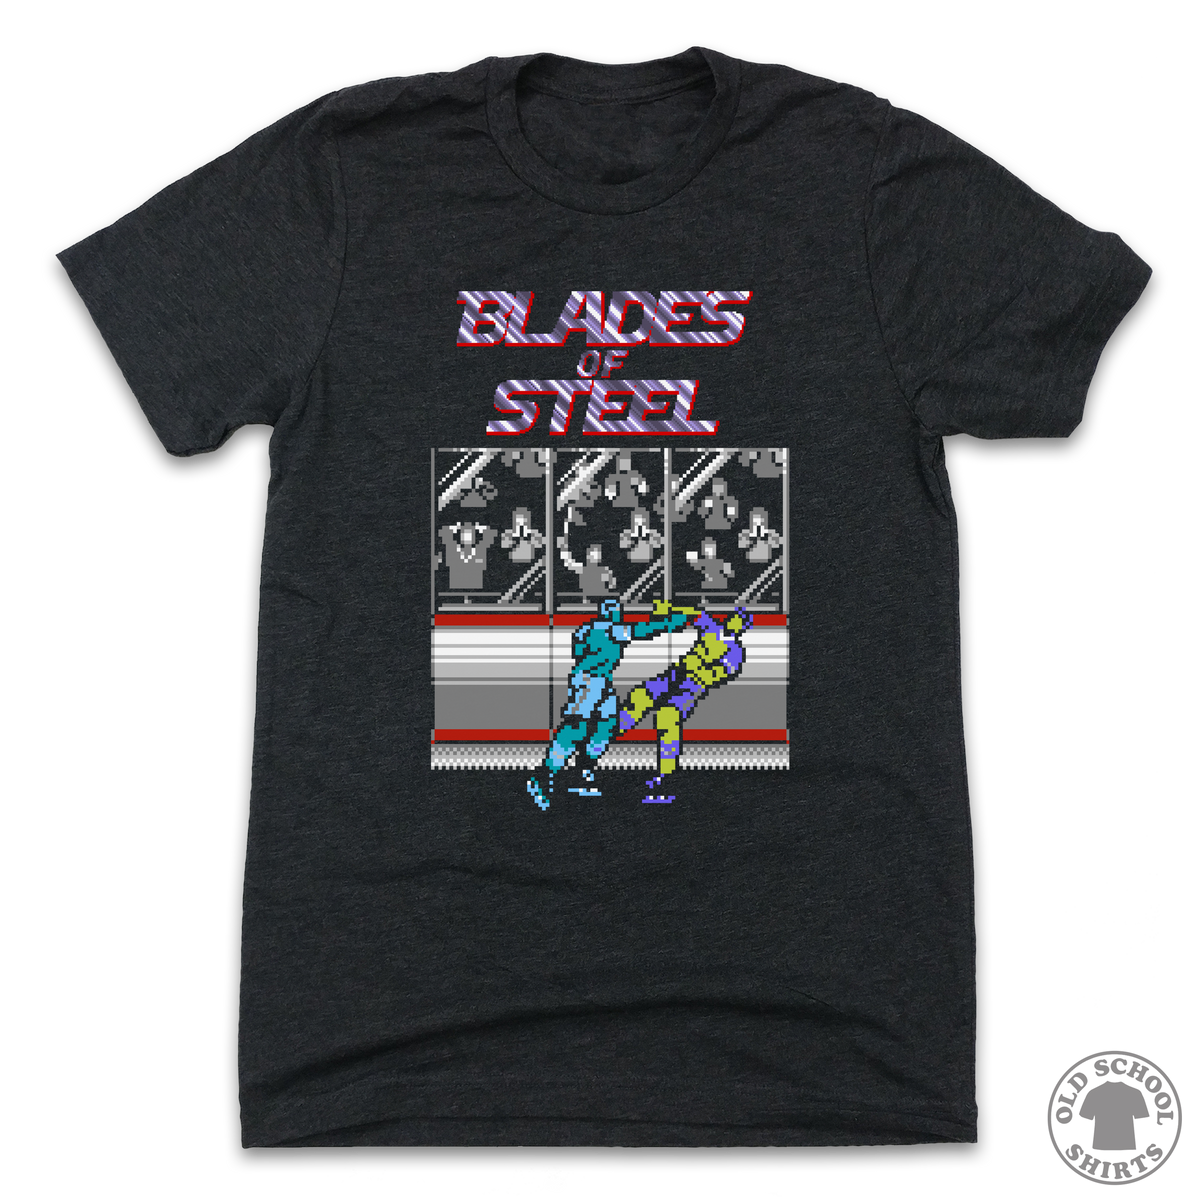 Blades of Steel - Old School Shirts- Retro Sports T Shirts